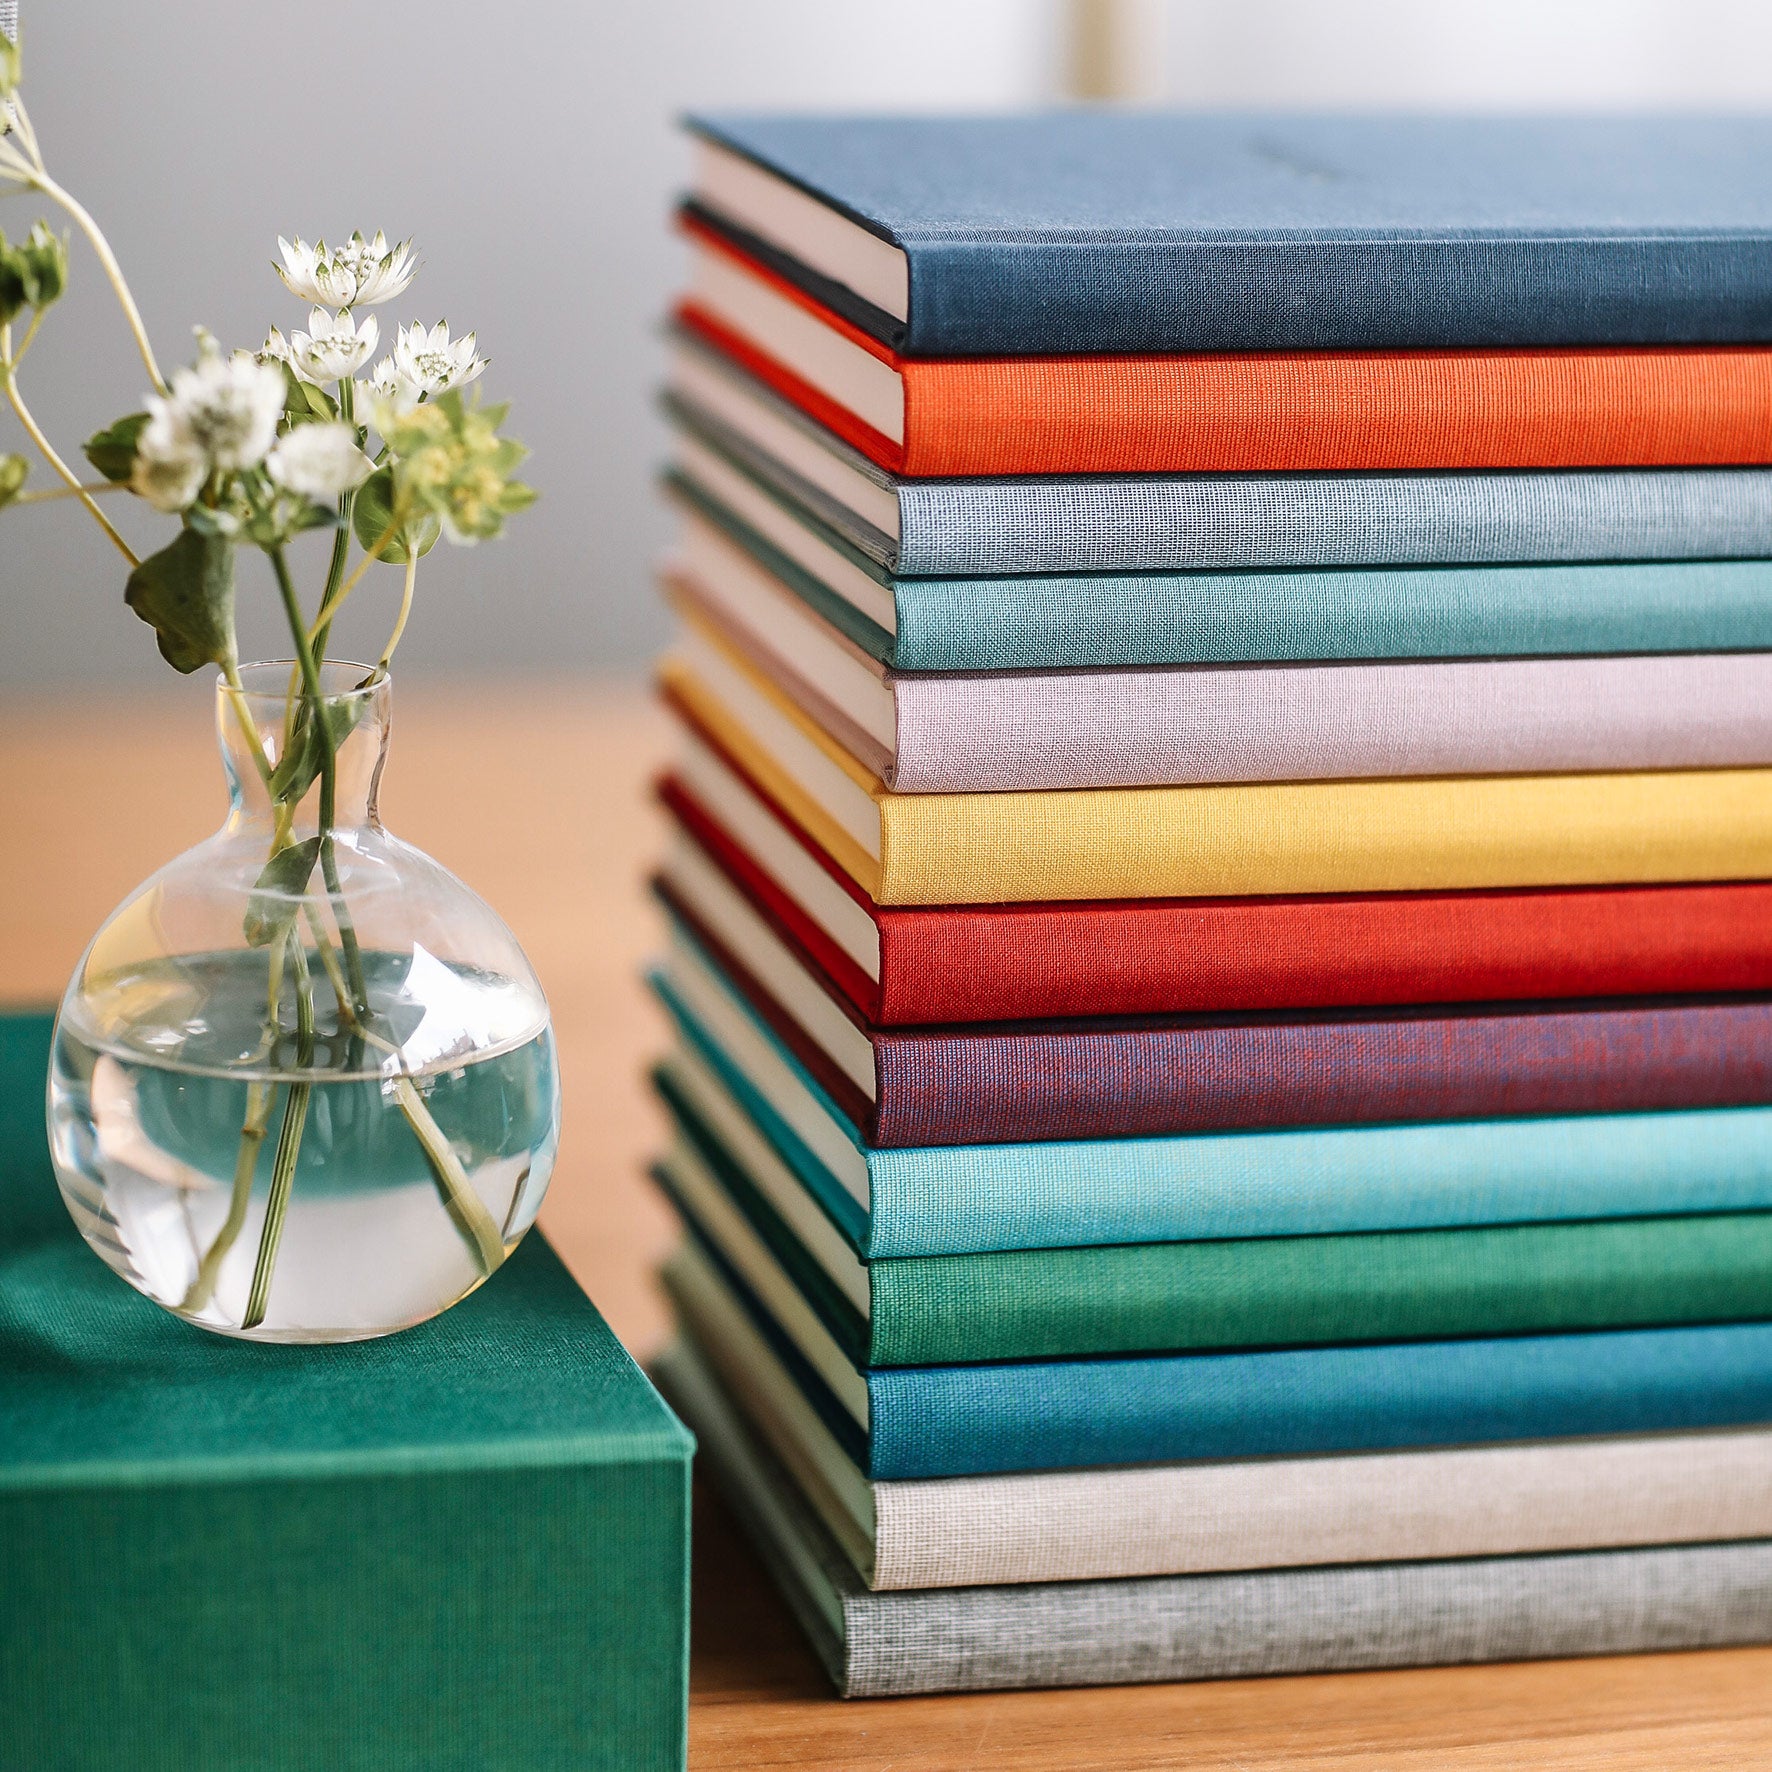 Bookbinders Design - Cloth Notebook - Large - Smoke Blue